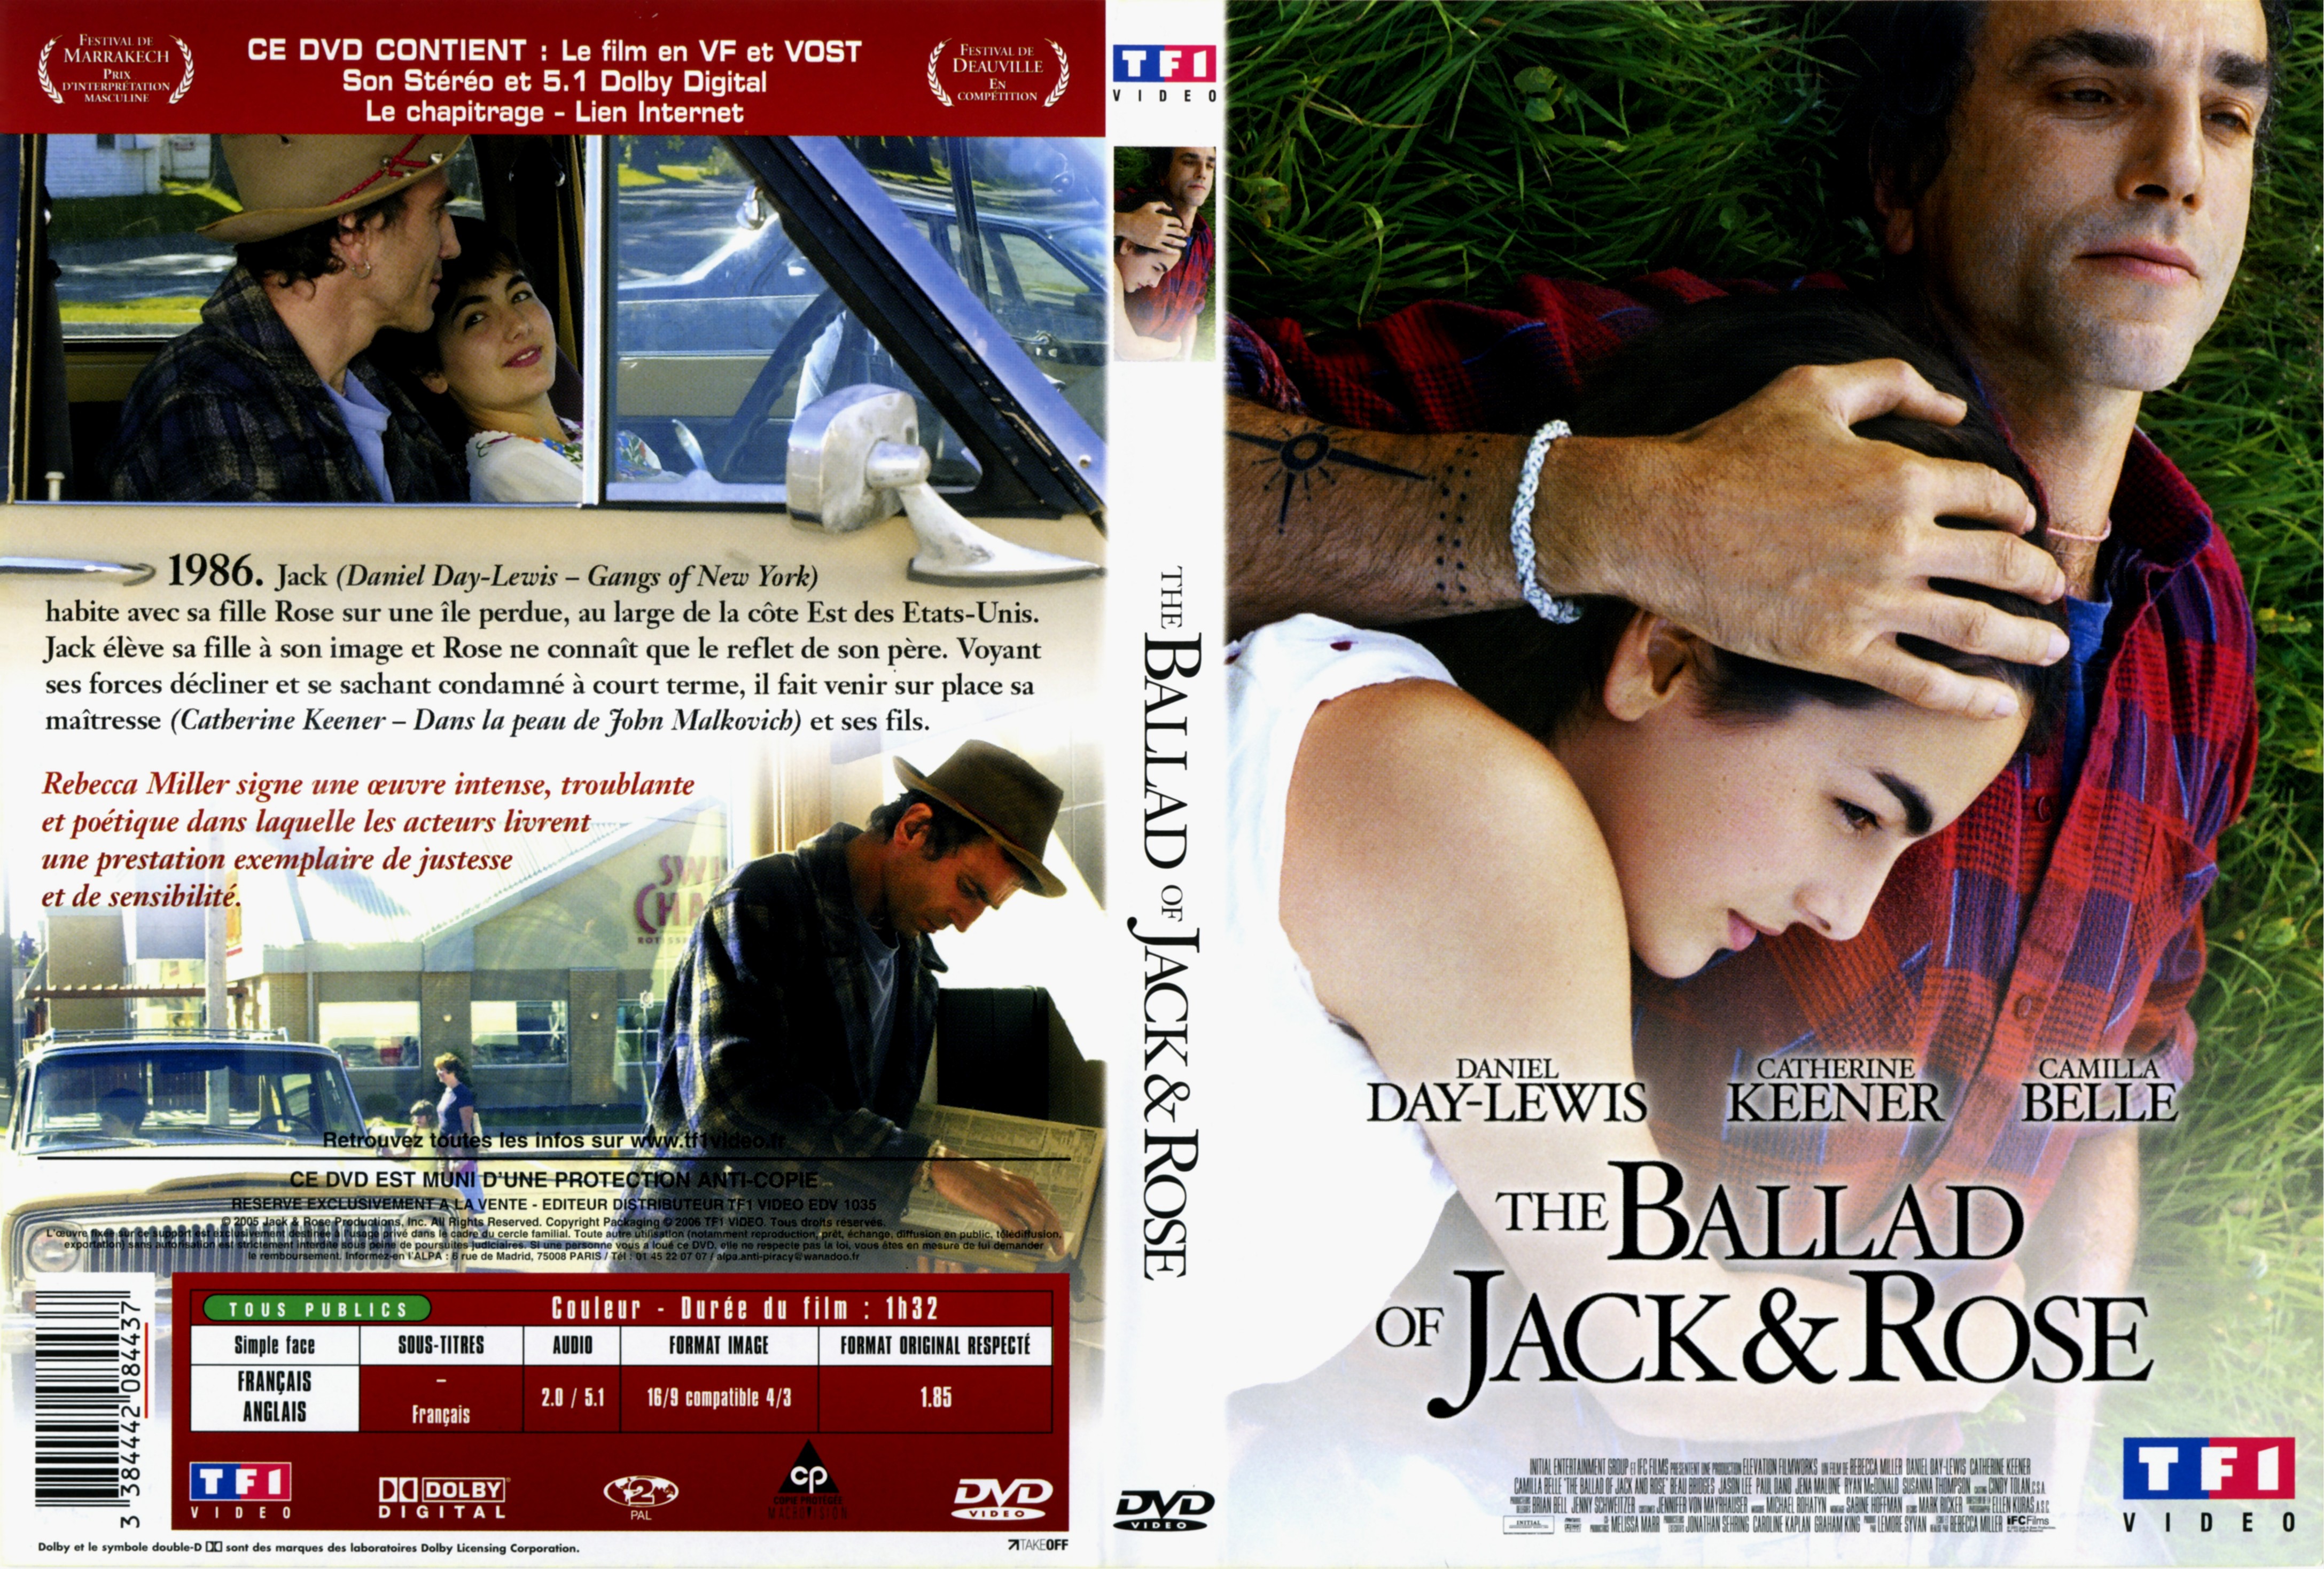 Jaquette DVD The ballad of Jack and Rose v2